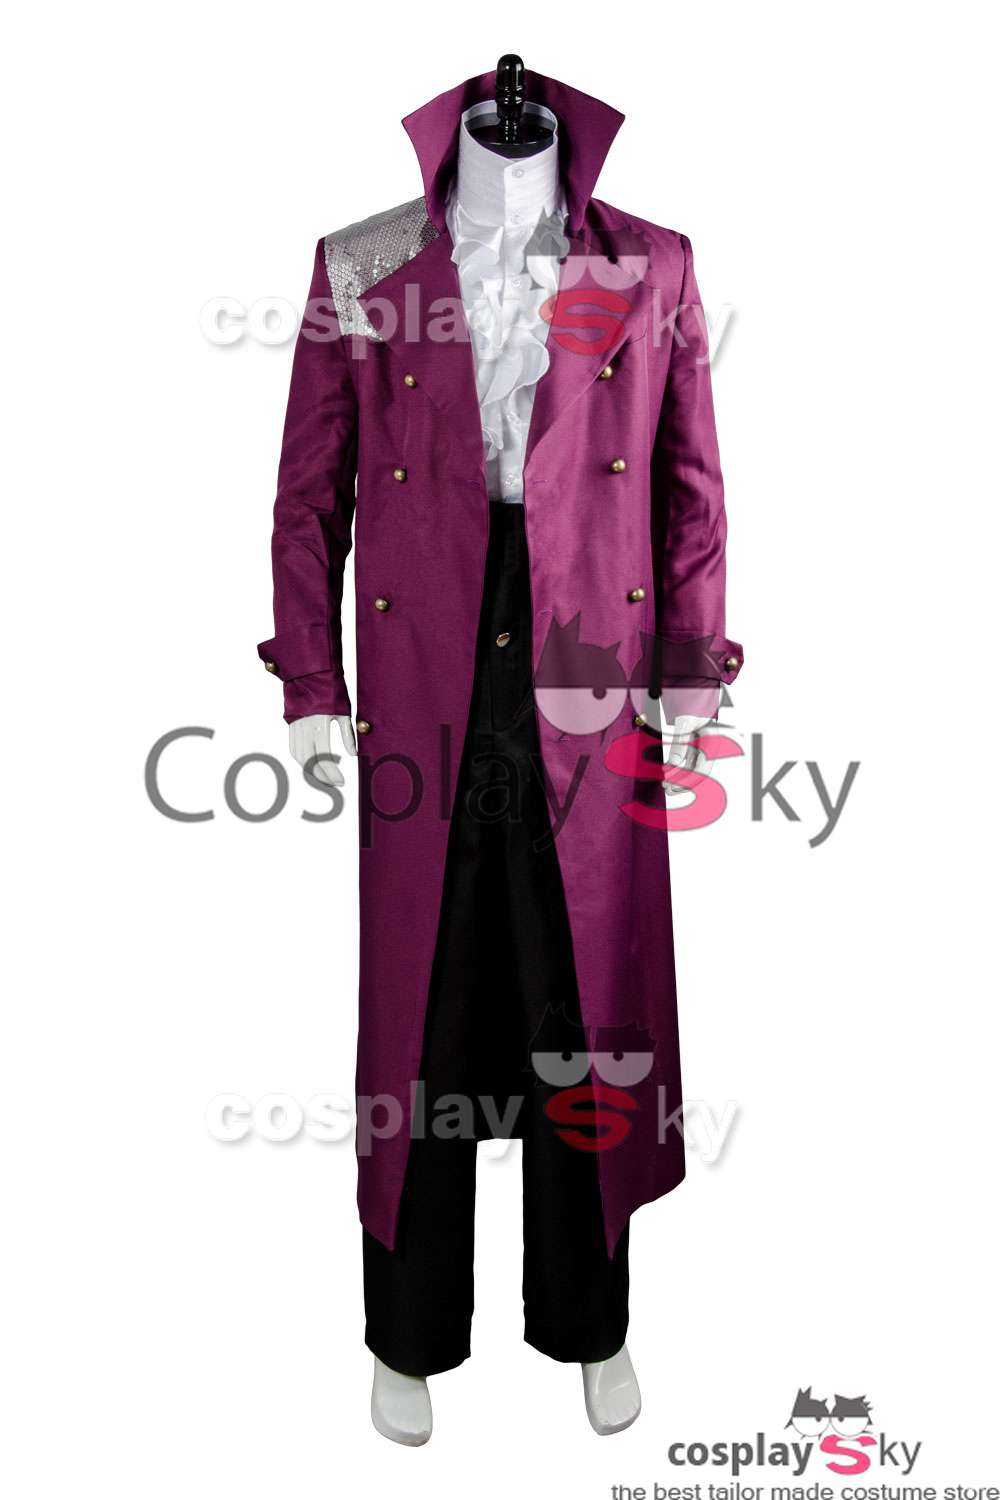 Prince Rogers Nelson Purple Rain Coat Full Set Kostüm Cosplay Lila